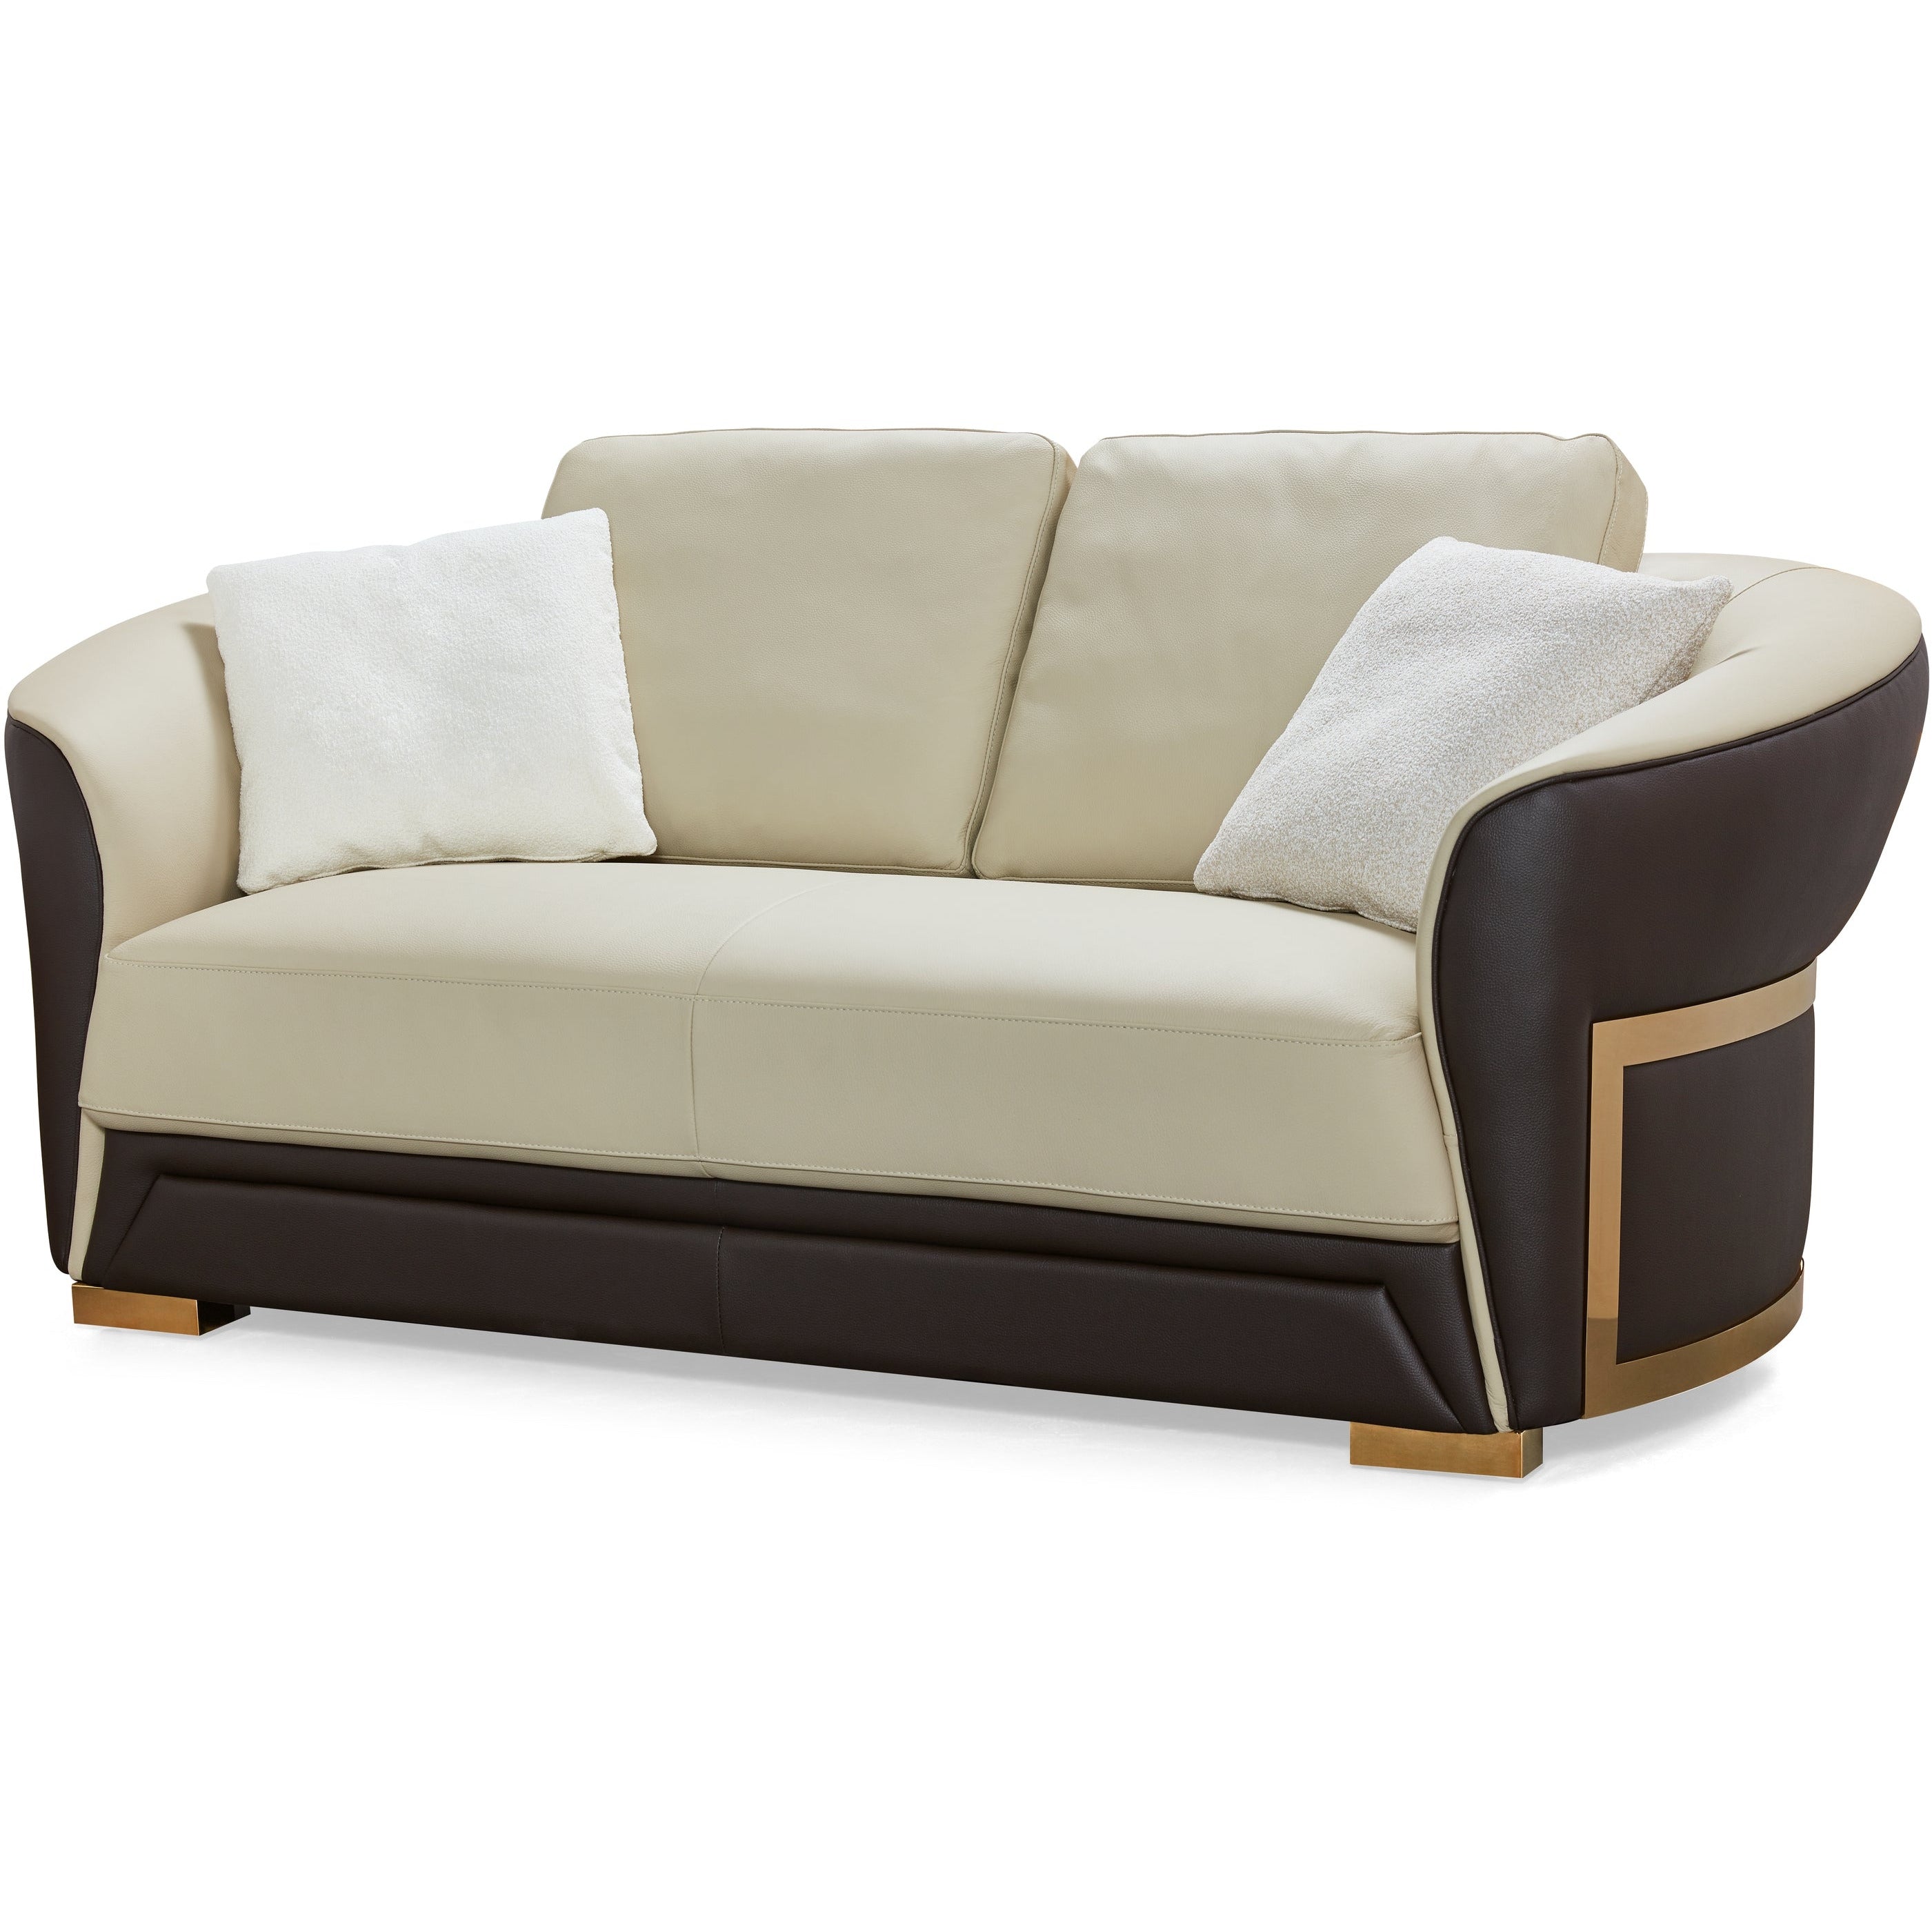 European Furniture - Celine 3 Piece Sofa Set Italian Leather Beige & Chocolate - EF-89951 - New Star Living